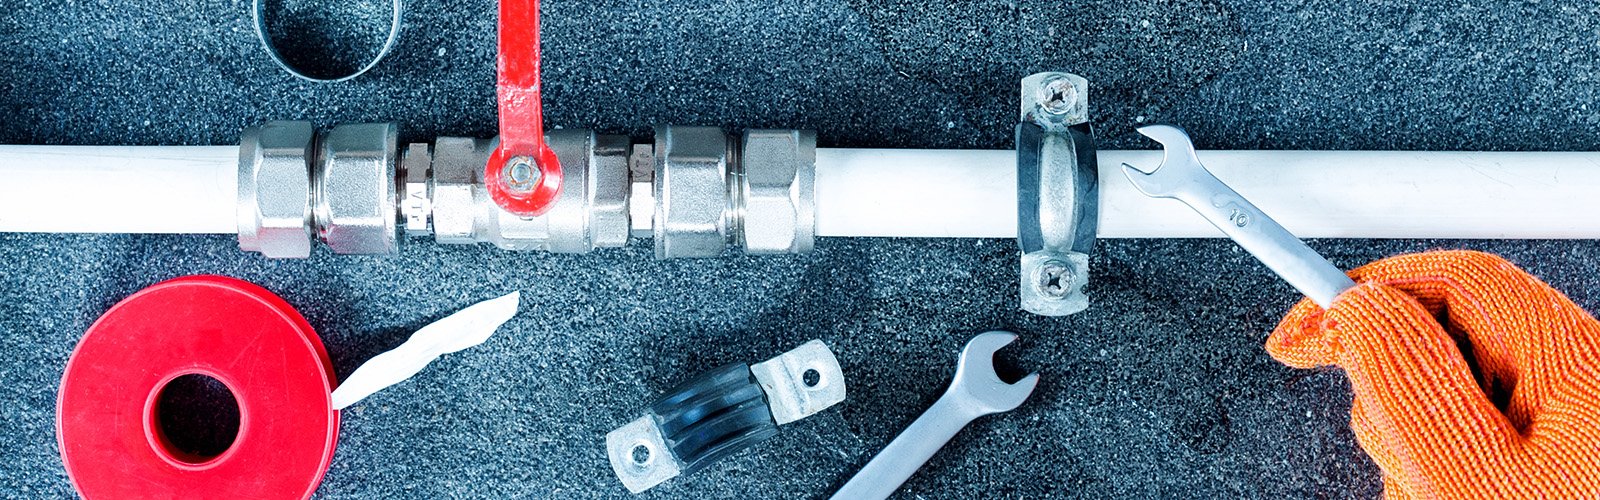 Repair of plumbing A leak in water pipes 